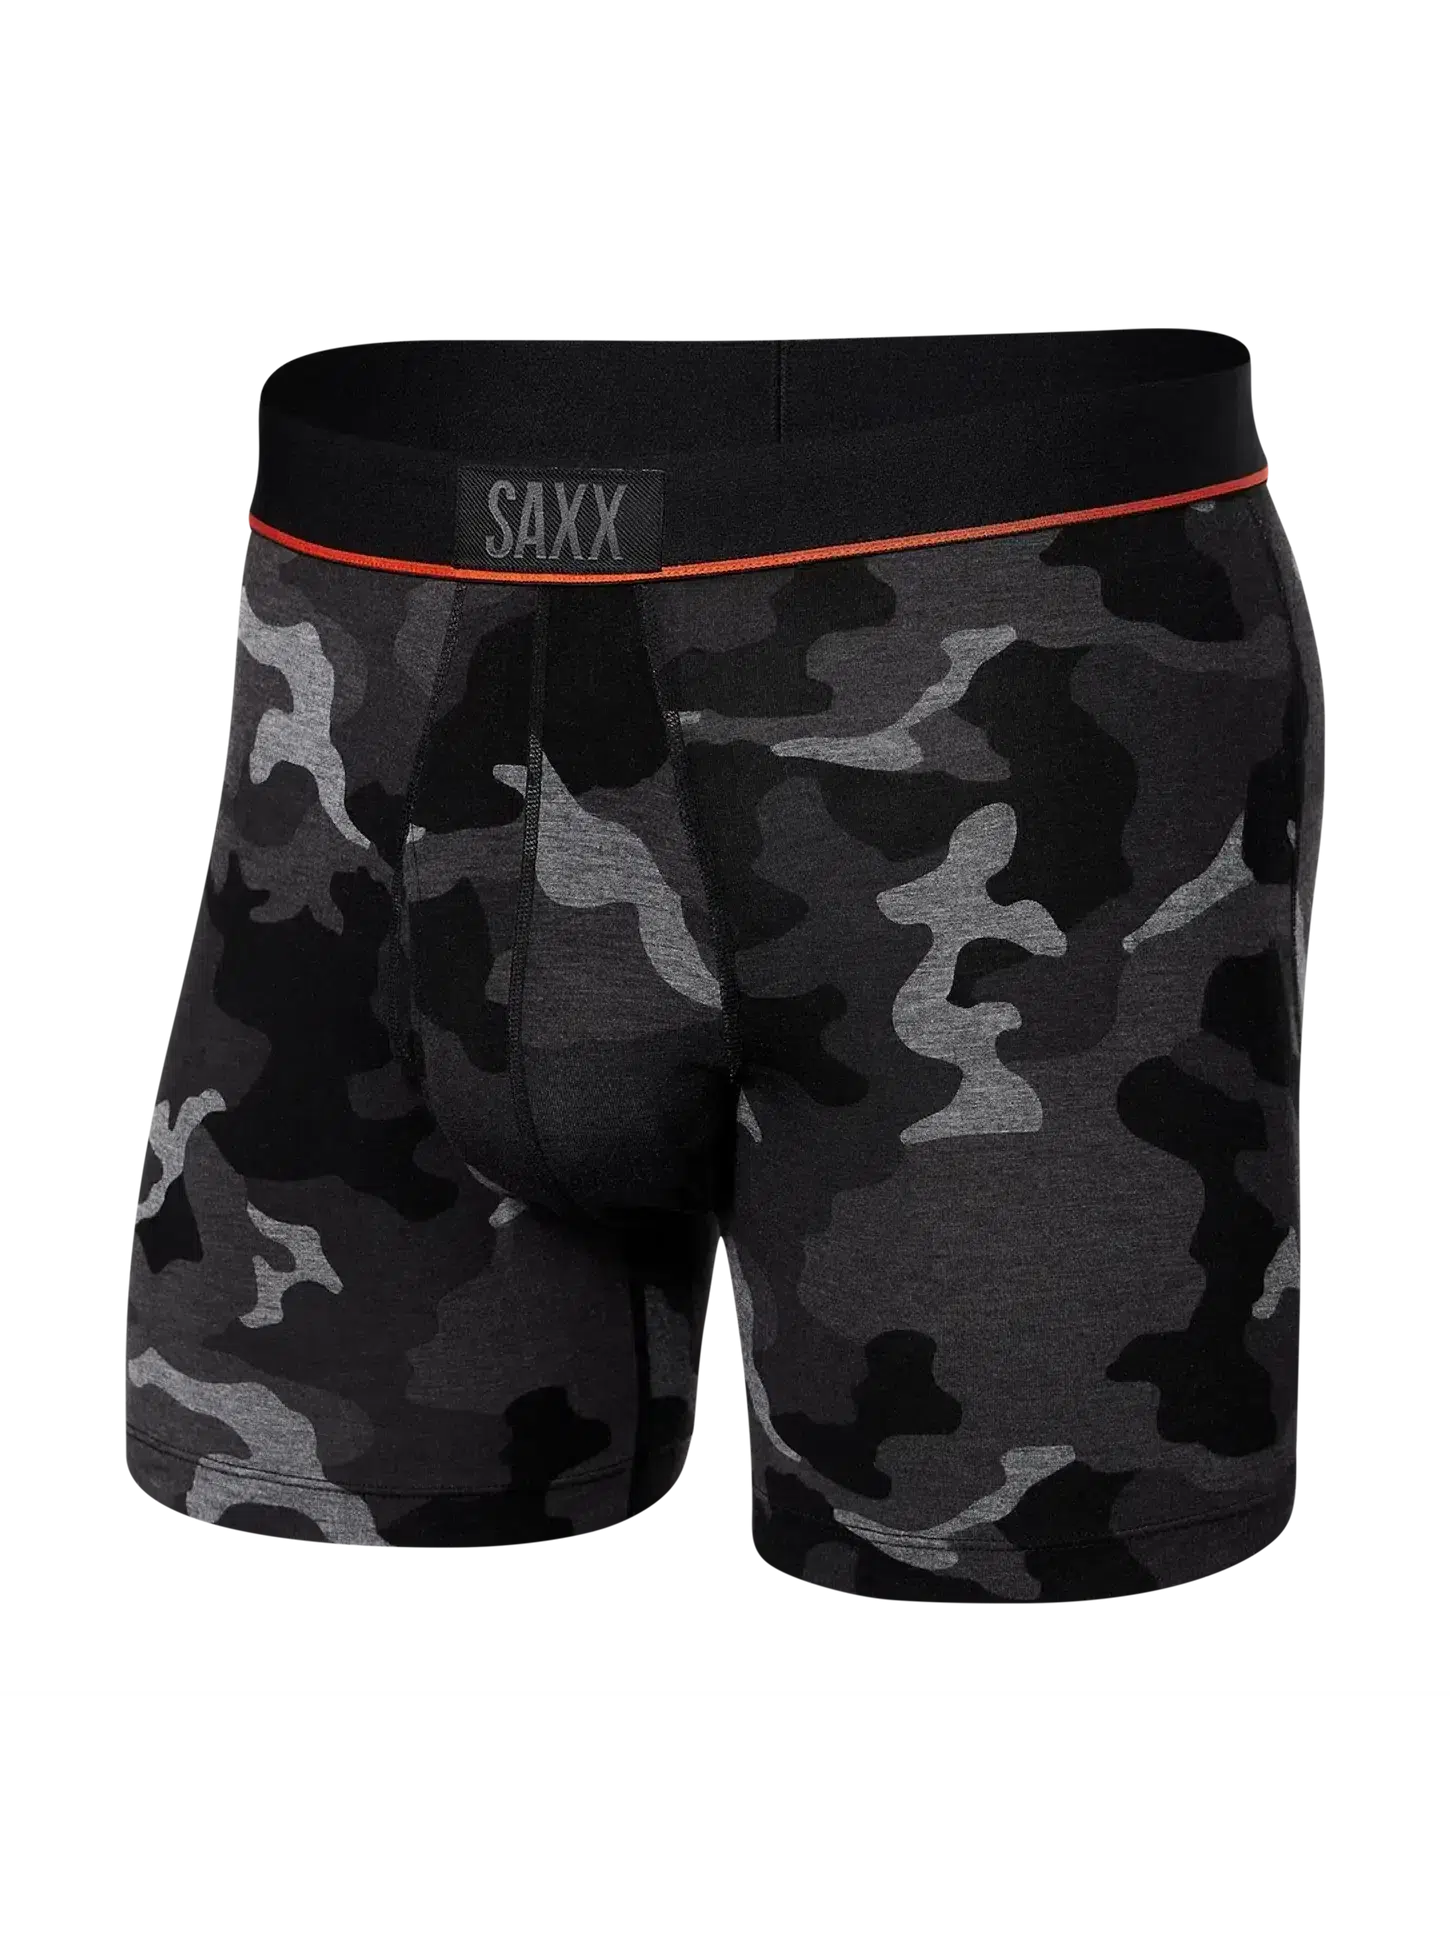 SAXX Ultra Oversize Camo Boxers